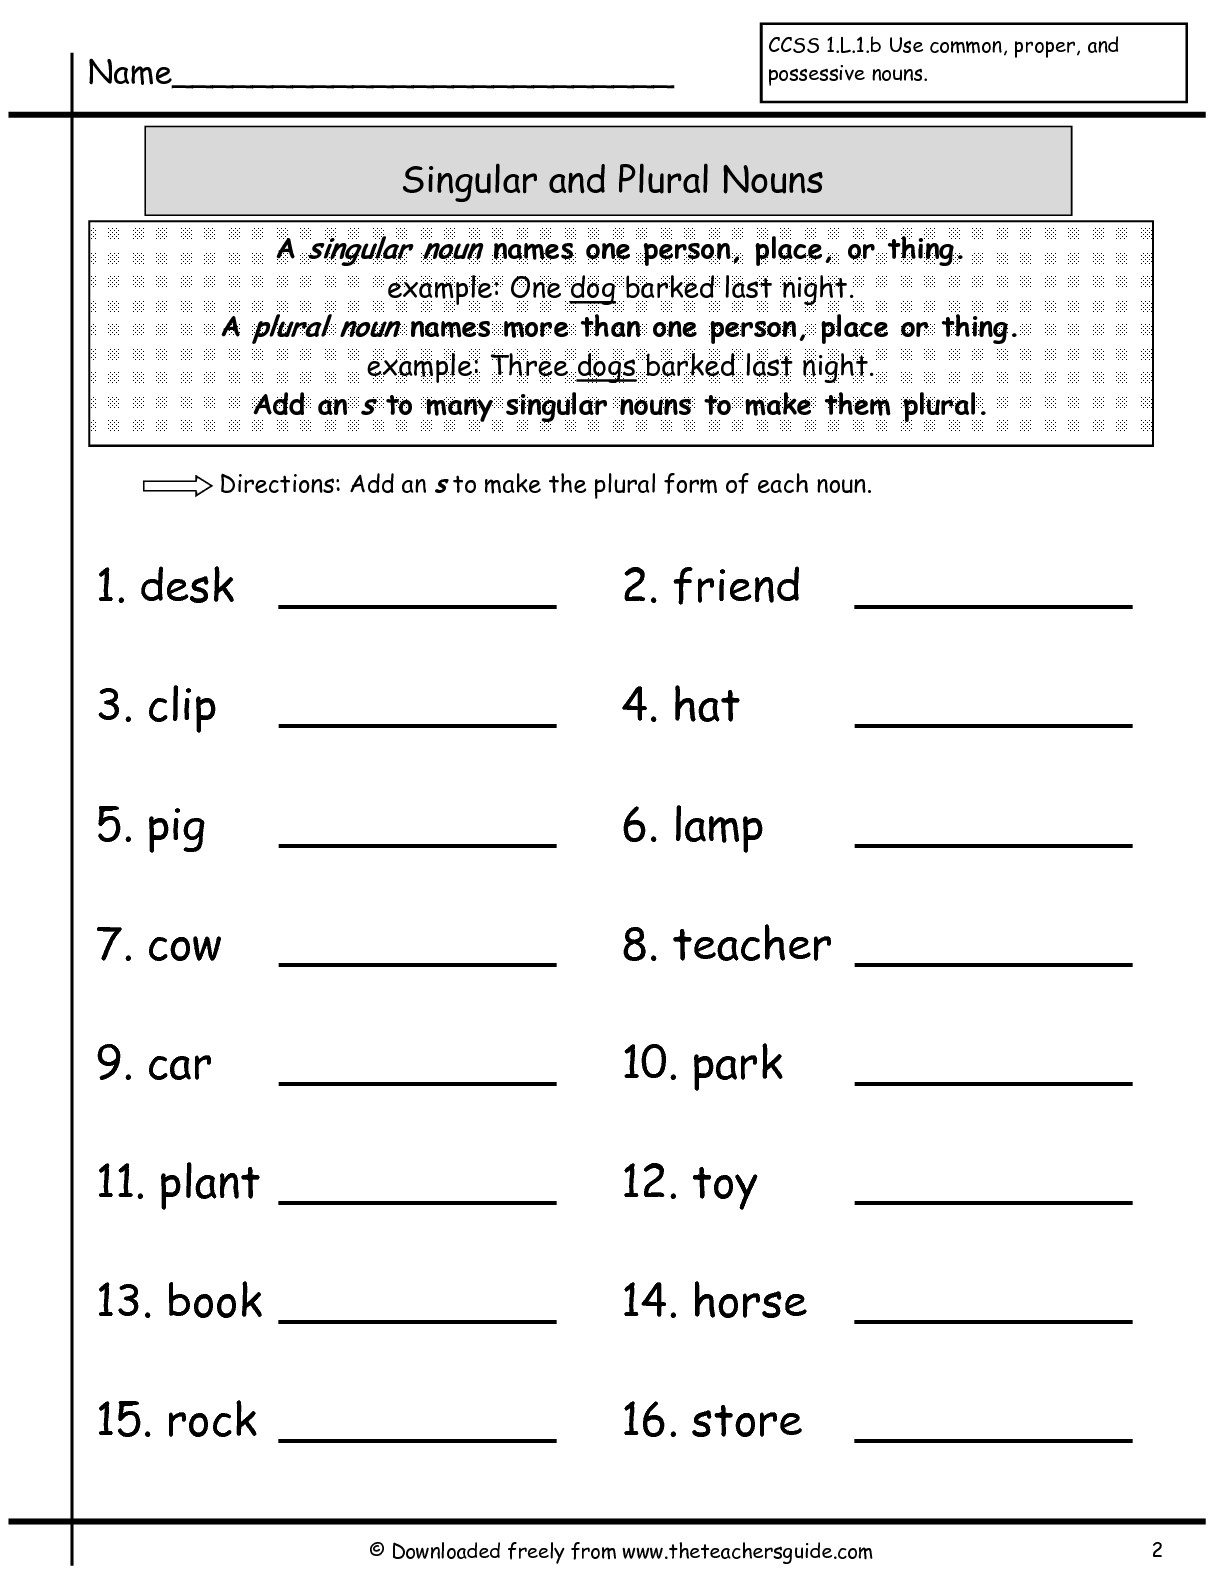 creating-plural-nouns-worksheet-have-fun-teaching-plural-nouns